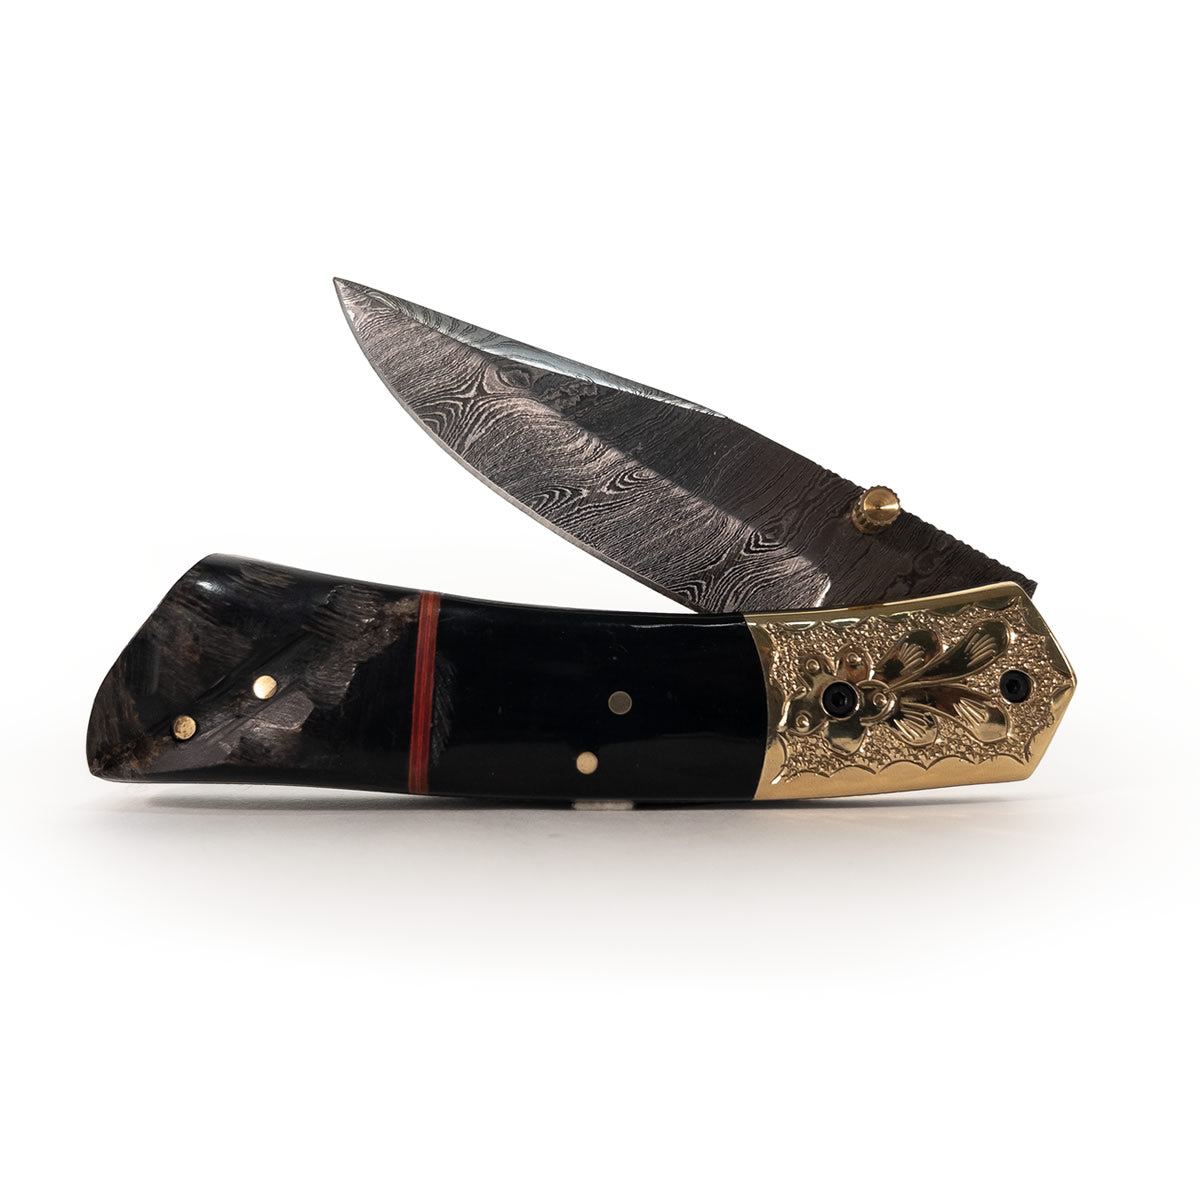 Canivete de aço damasco artesanal e chifre